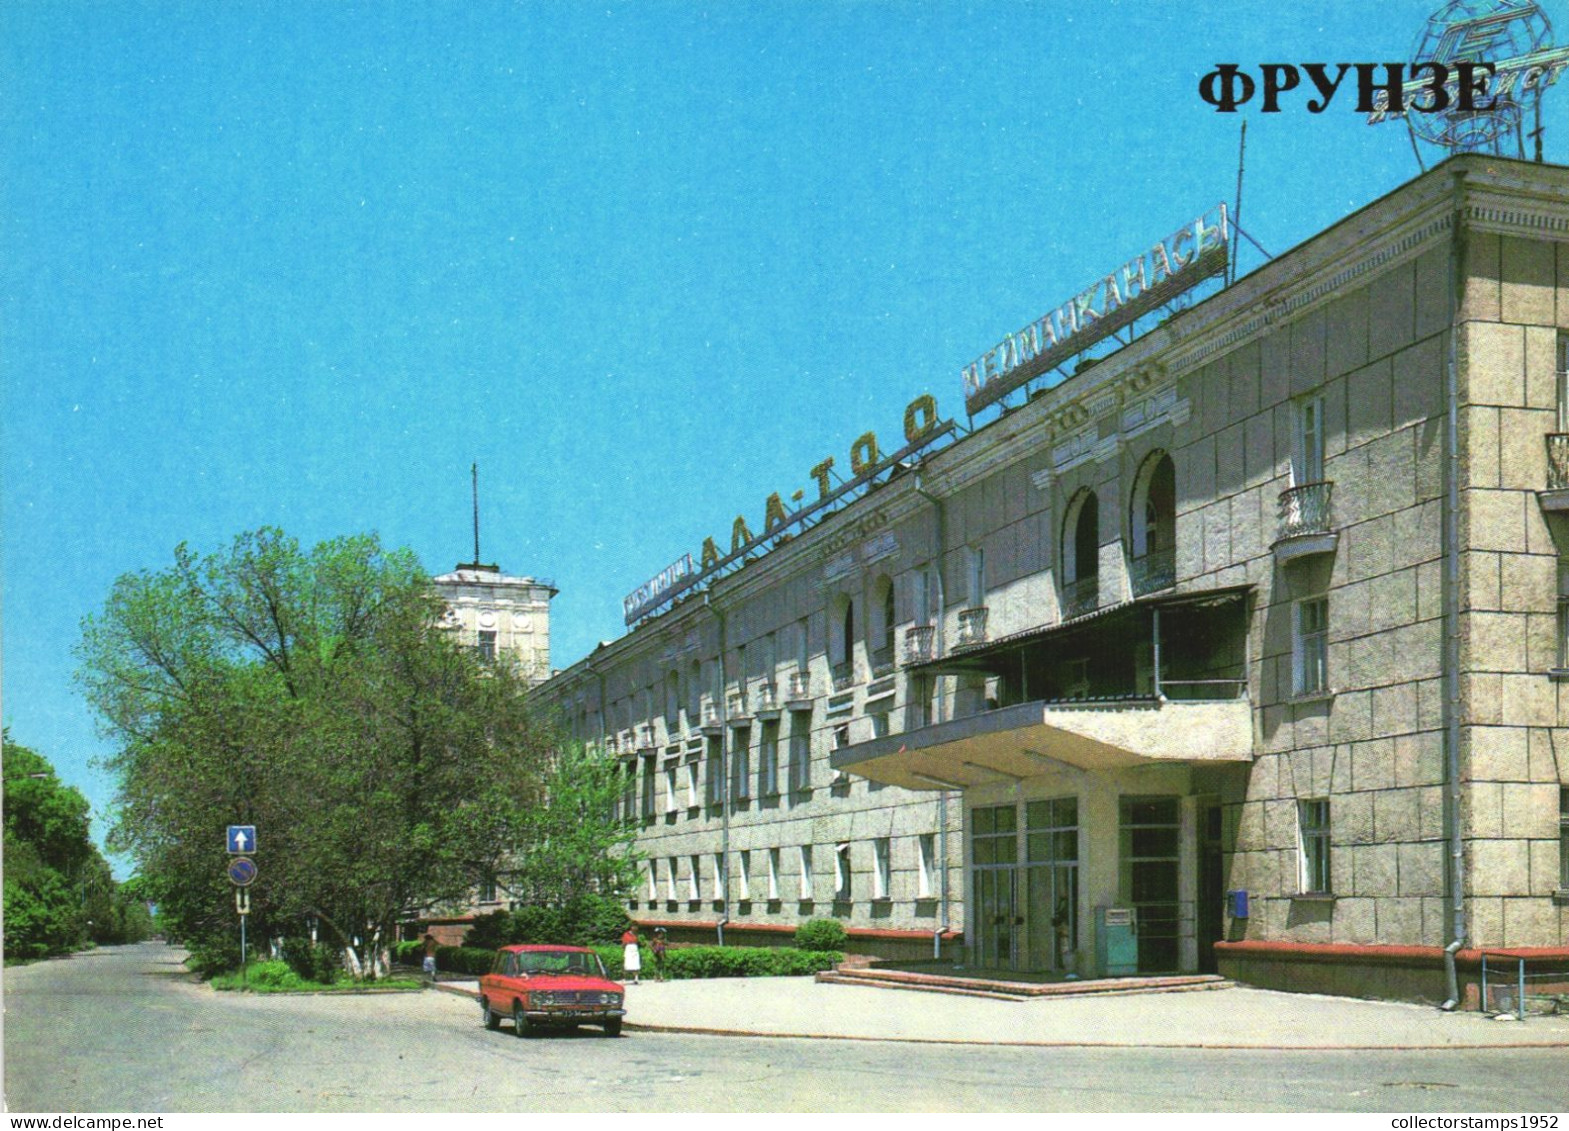 BYSHKEK, FRUNZE, HOTEL, CAR, ARCHITECTURE, KYRGYZSTAN, POSTCARD - Kirghizistan